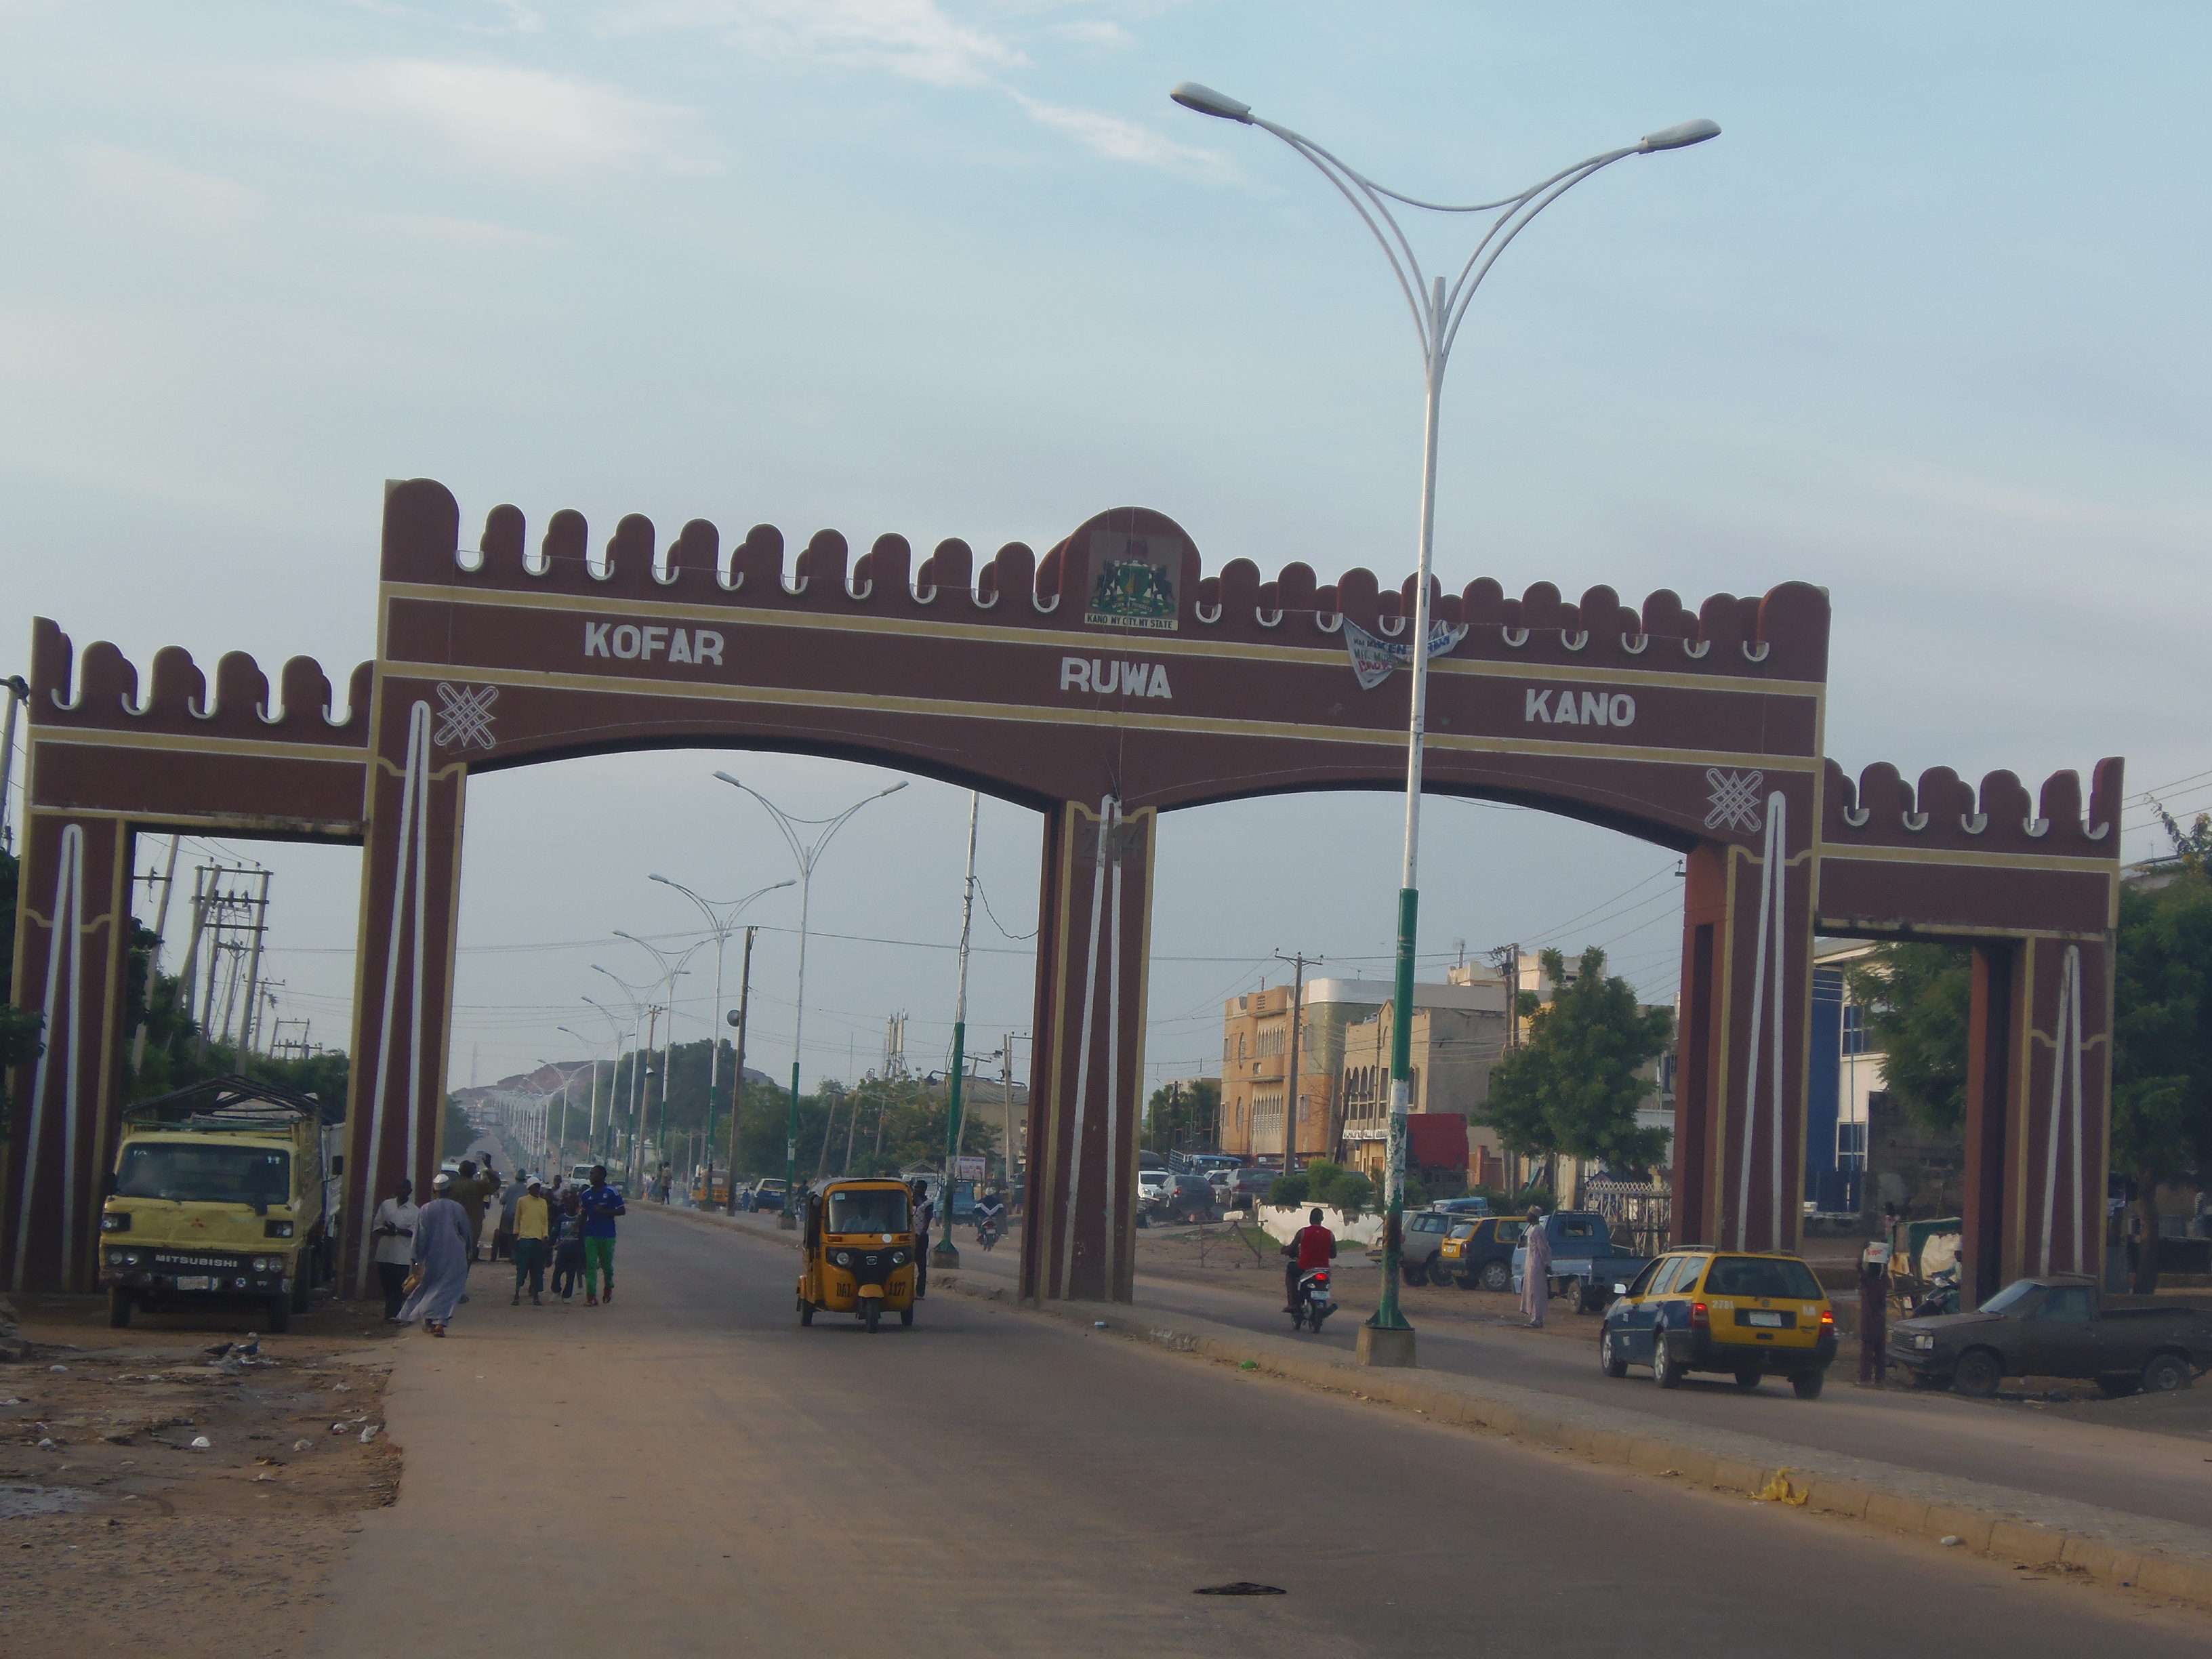 File:Kofar Ruwa - Kano City Gate.jpg - Wikimedia Commons